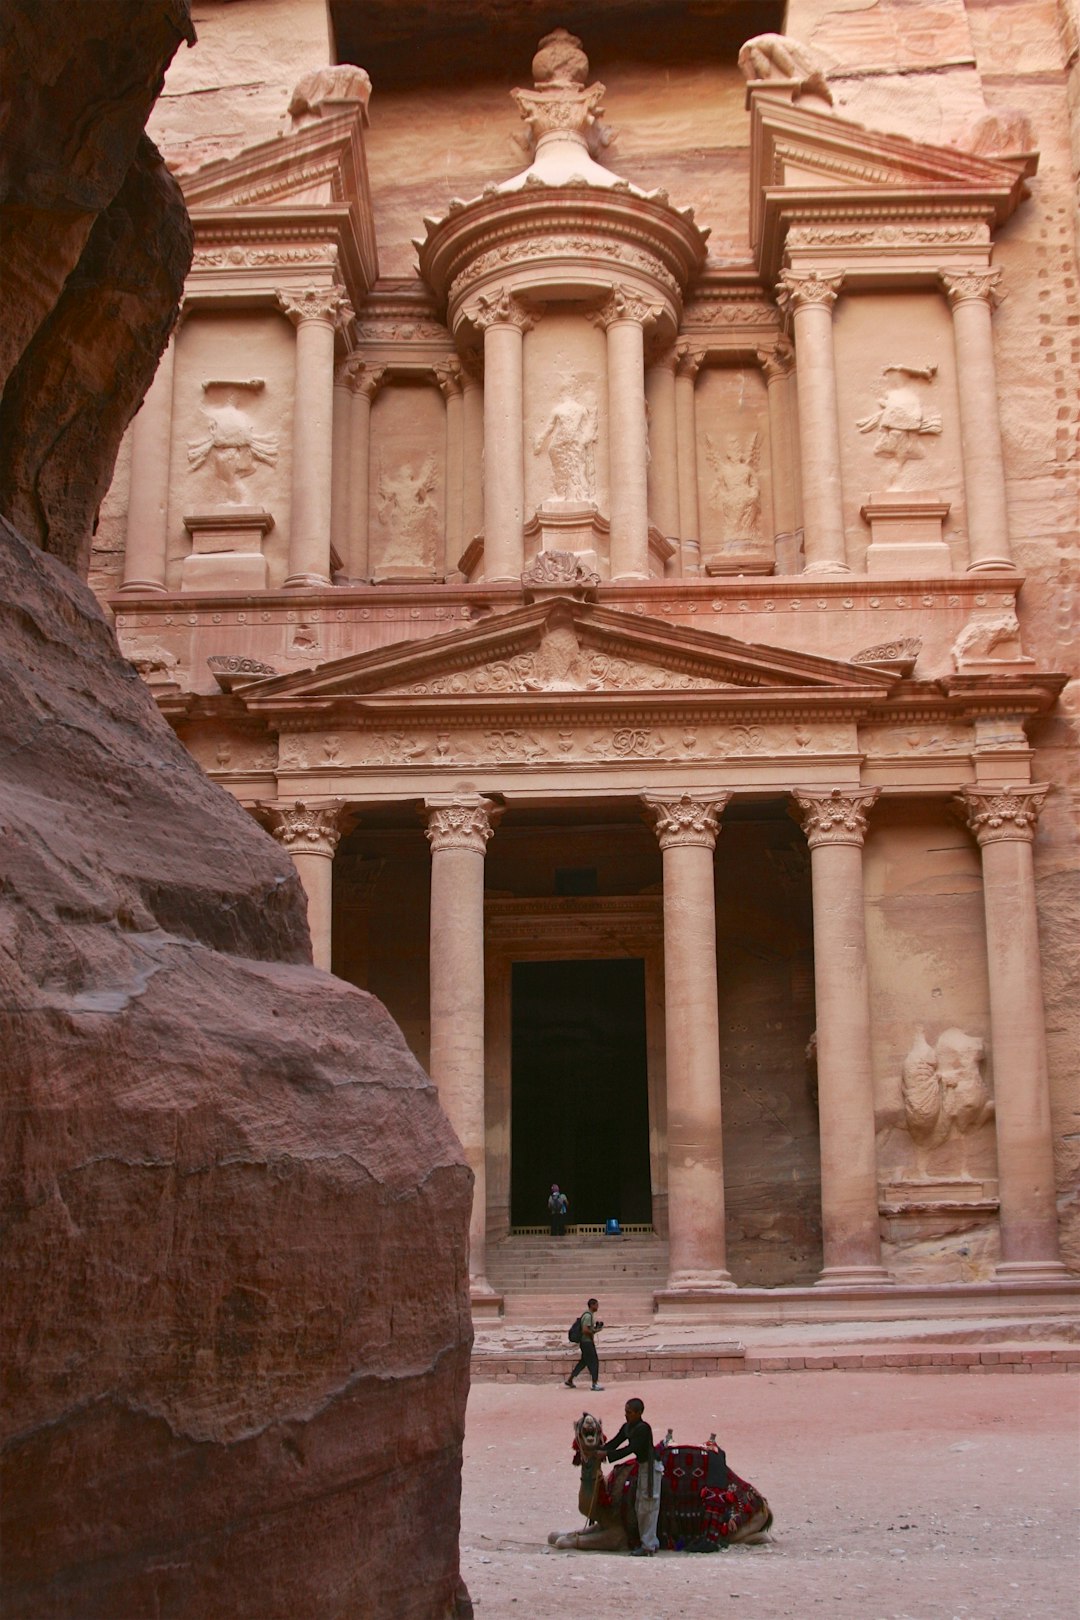 Petra, Jordan Pictures | Download Free Images on Unsplash